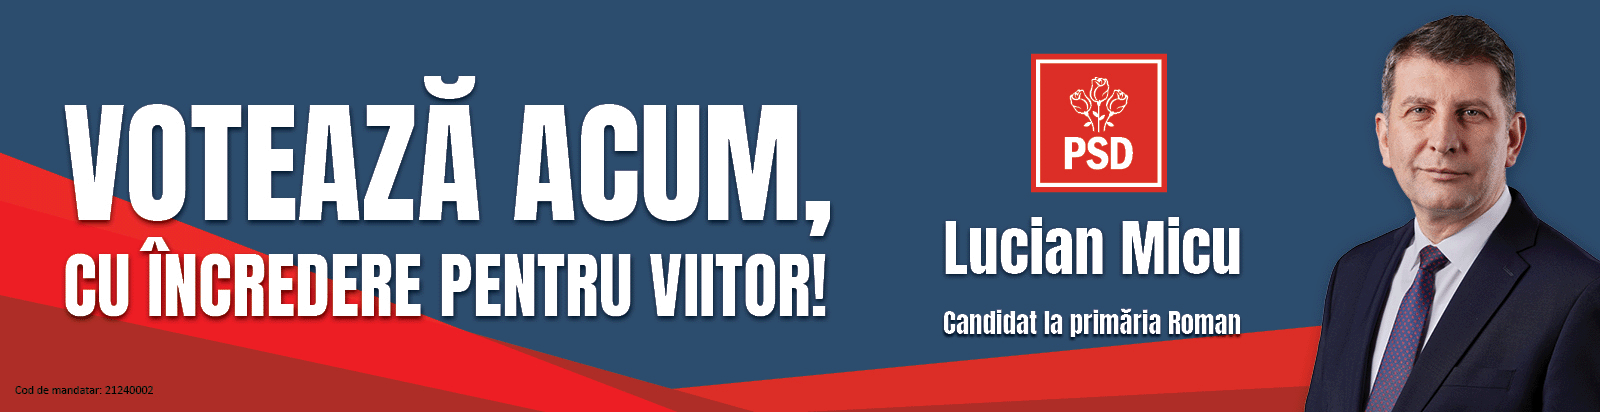 Lucian Micu